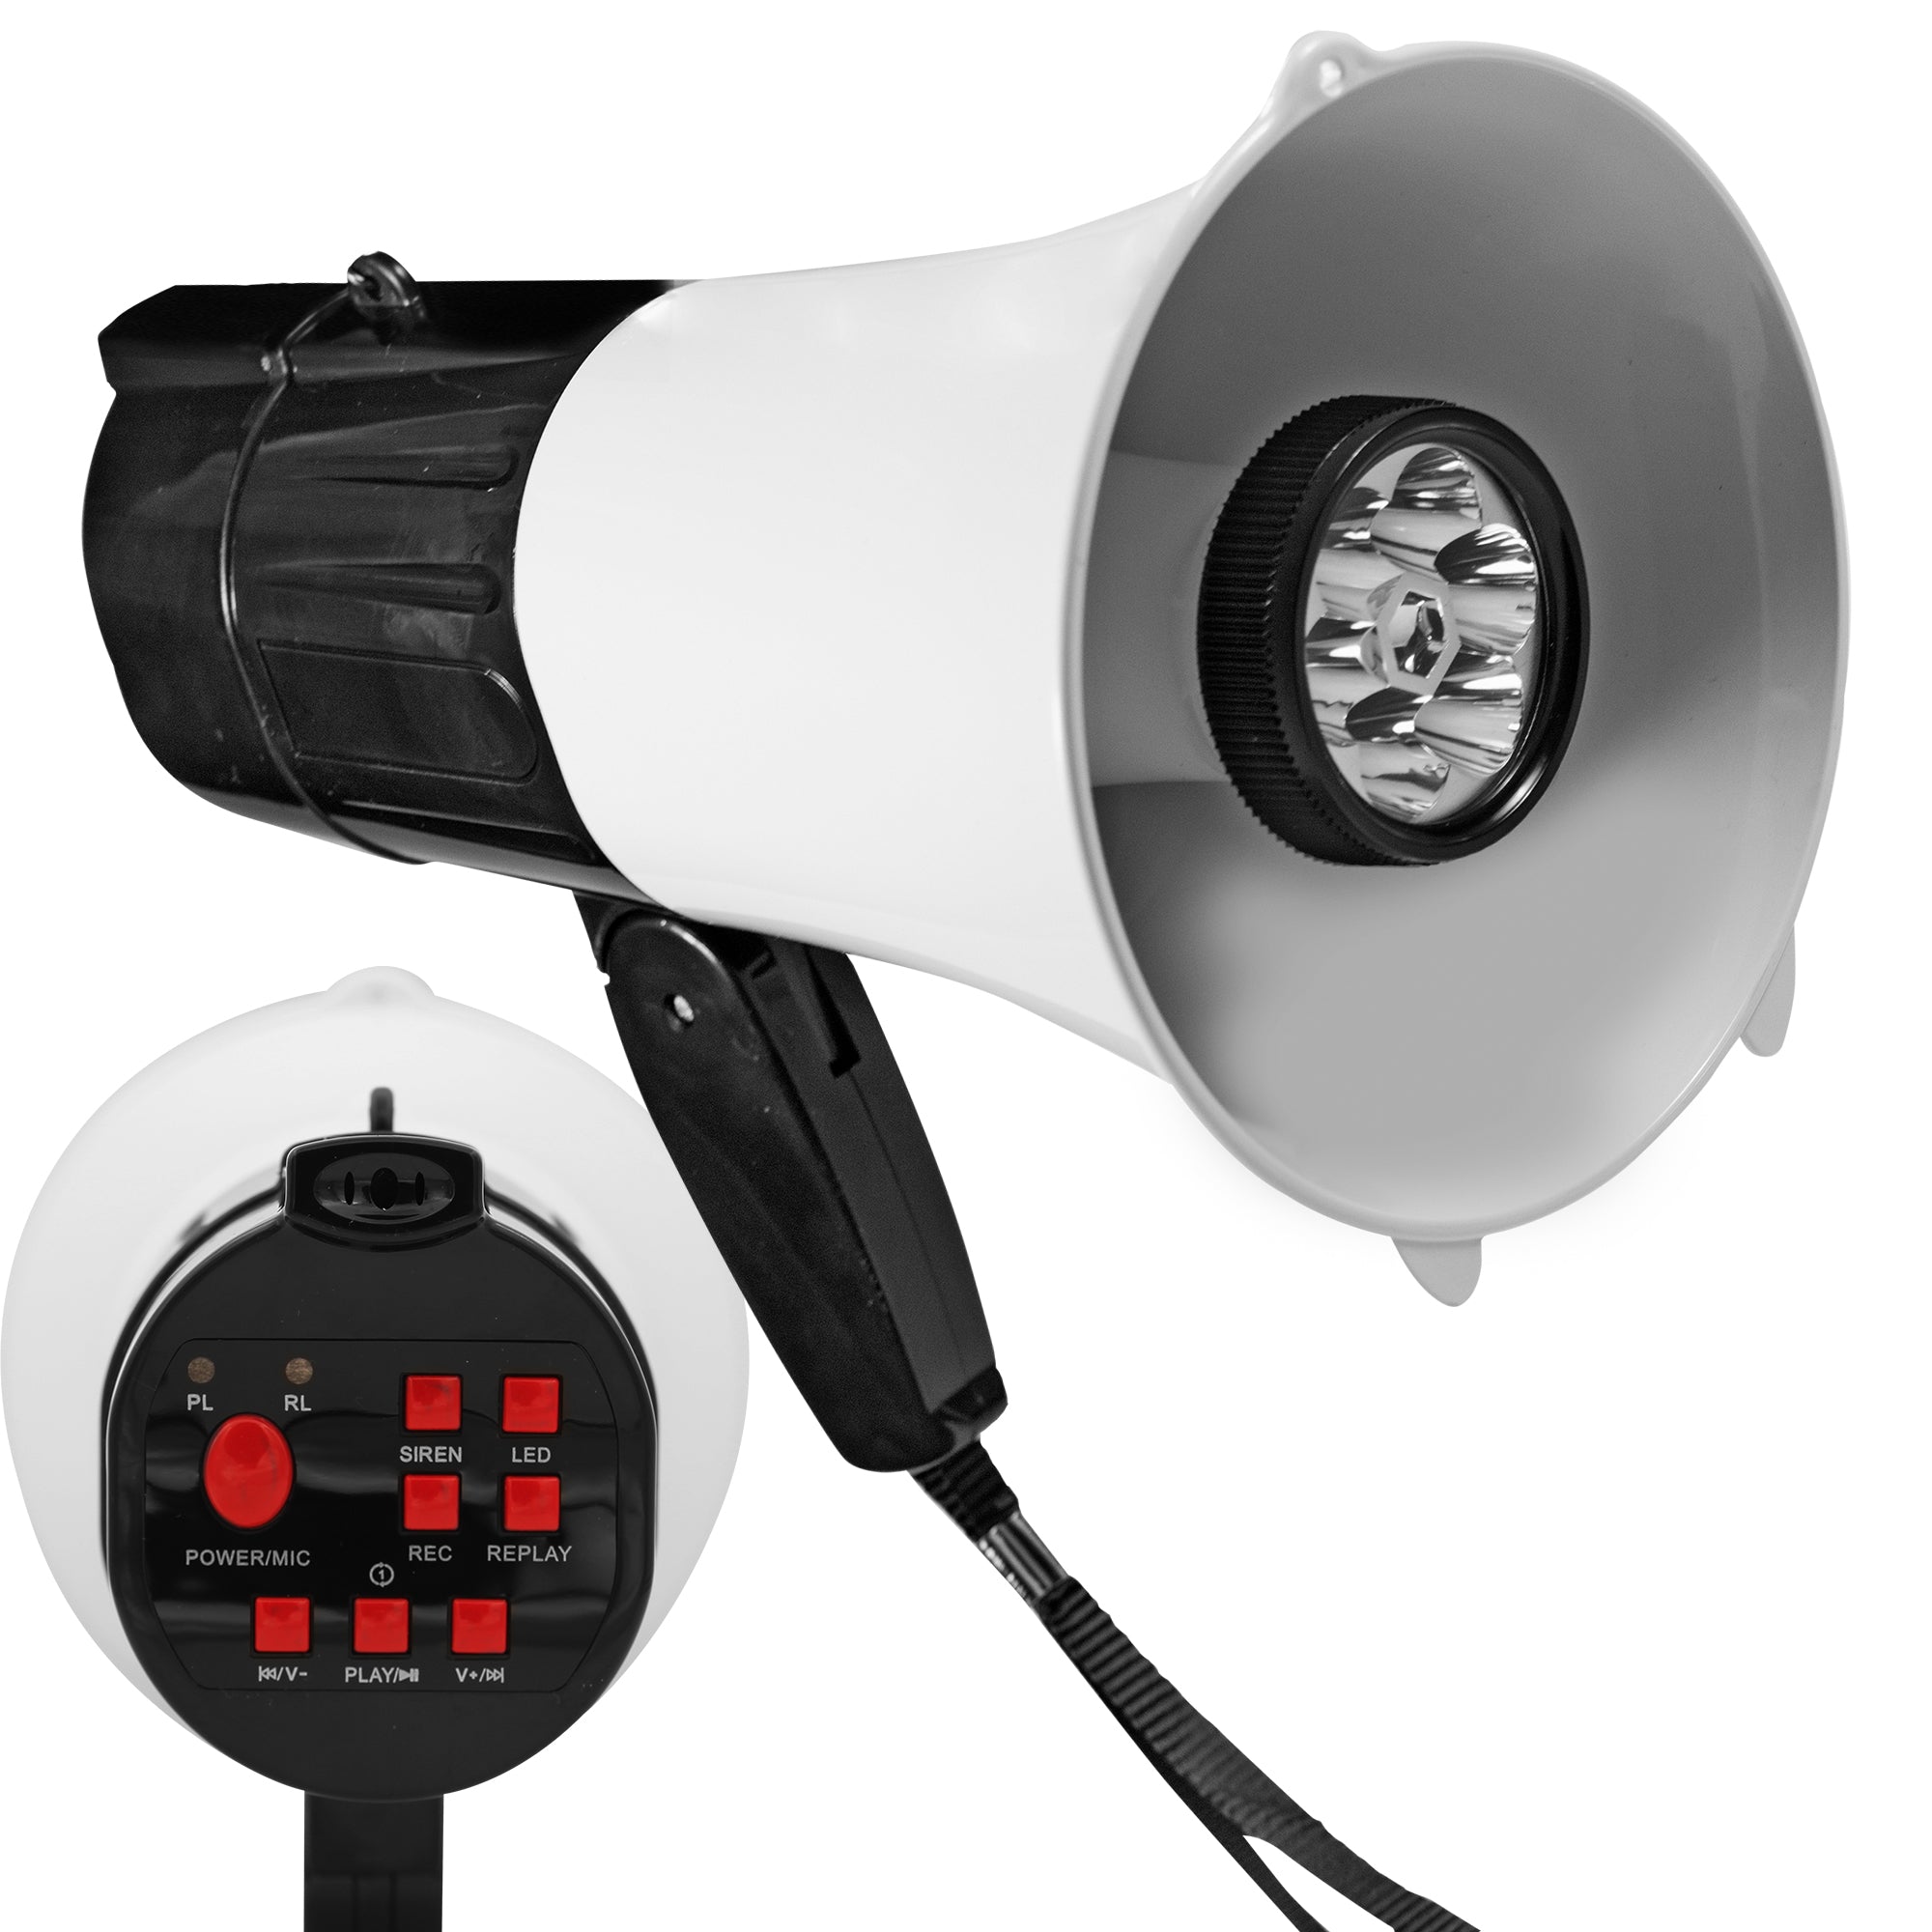 5 Core High Power Megaphone 30W Peak Loud Siren Noise Maker Professional Bullhorn Speaker PA System w LED Flashlight Recording USB SD Card Adjustable Volume for Sports Speeches Events Emergencies - 148 LED